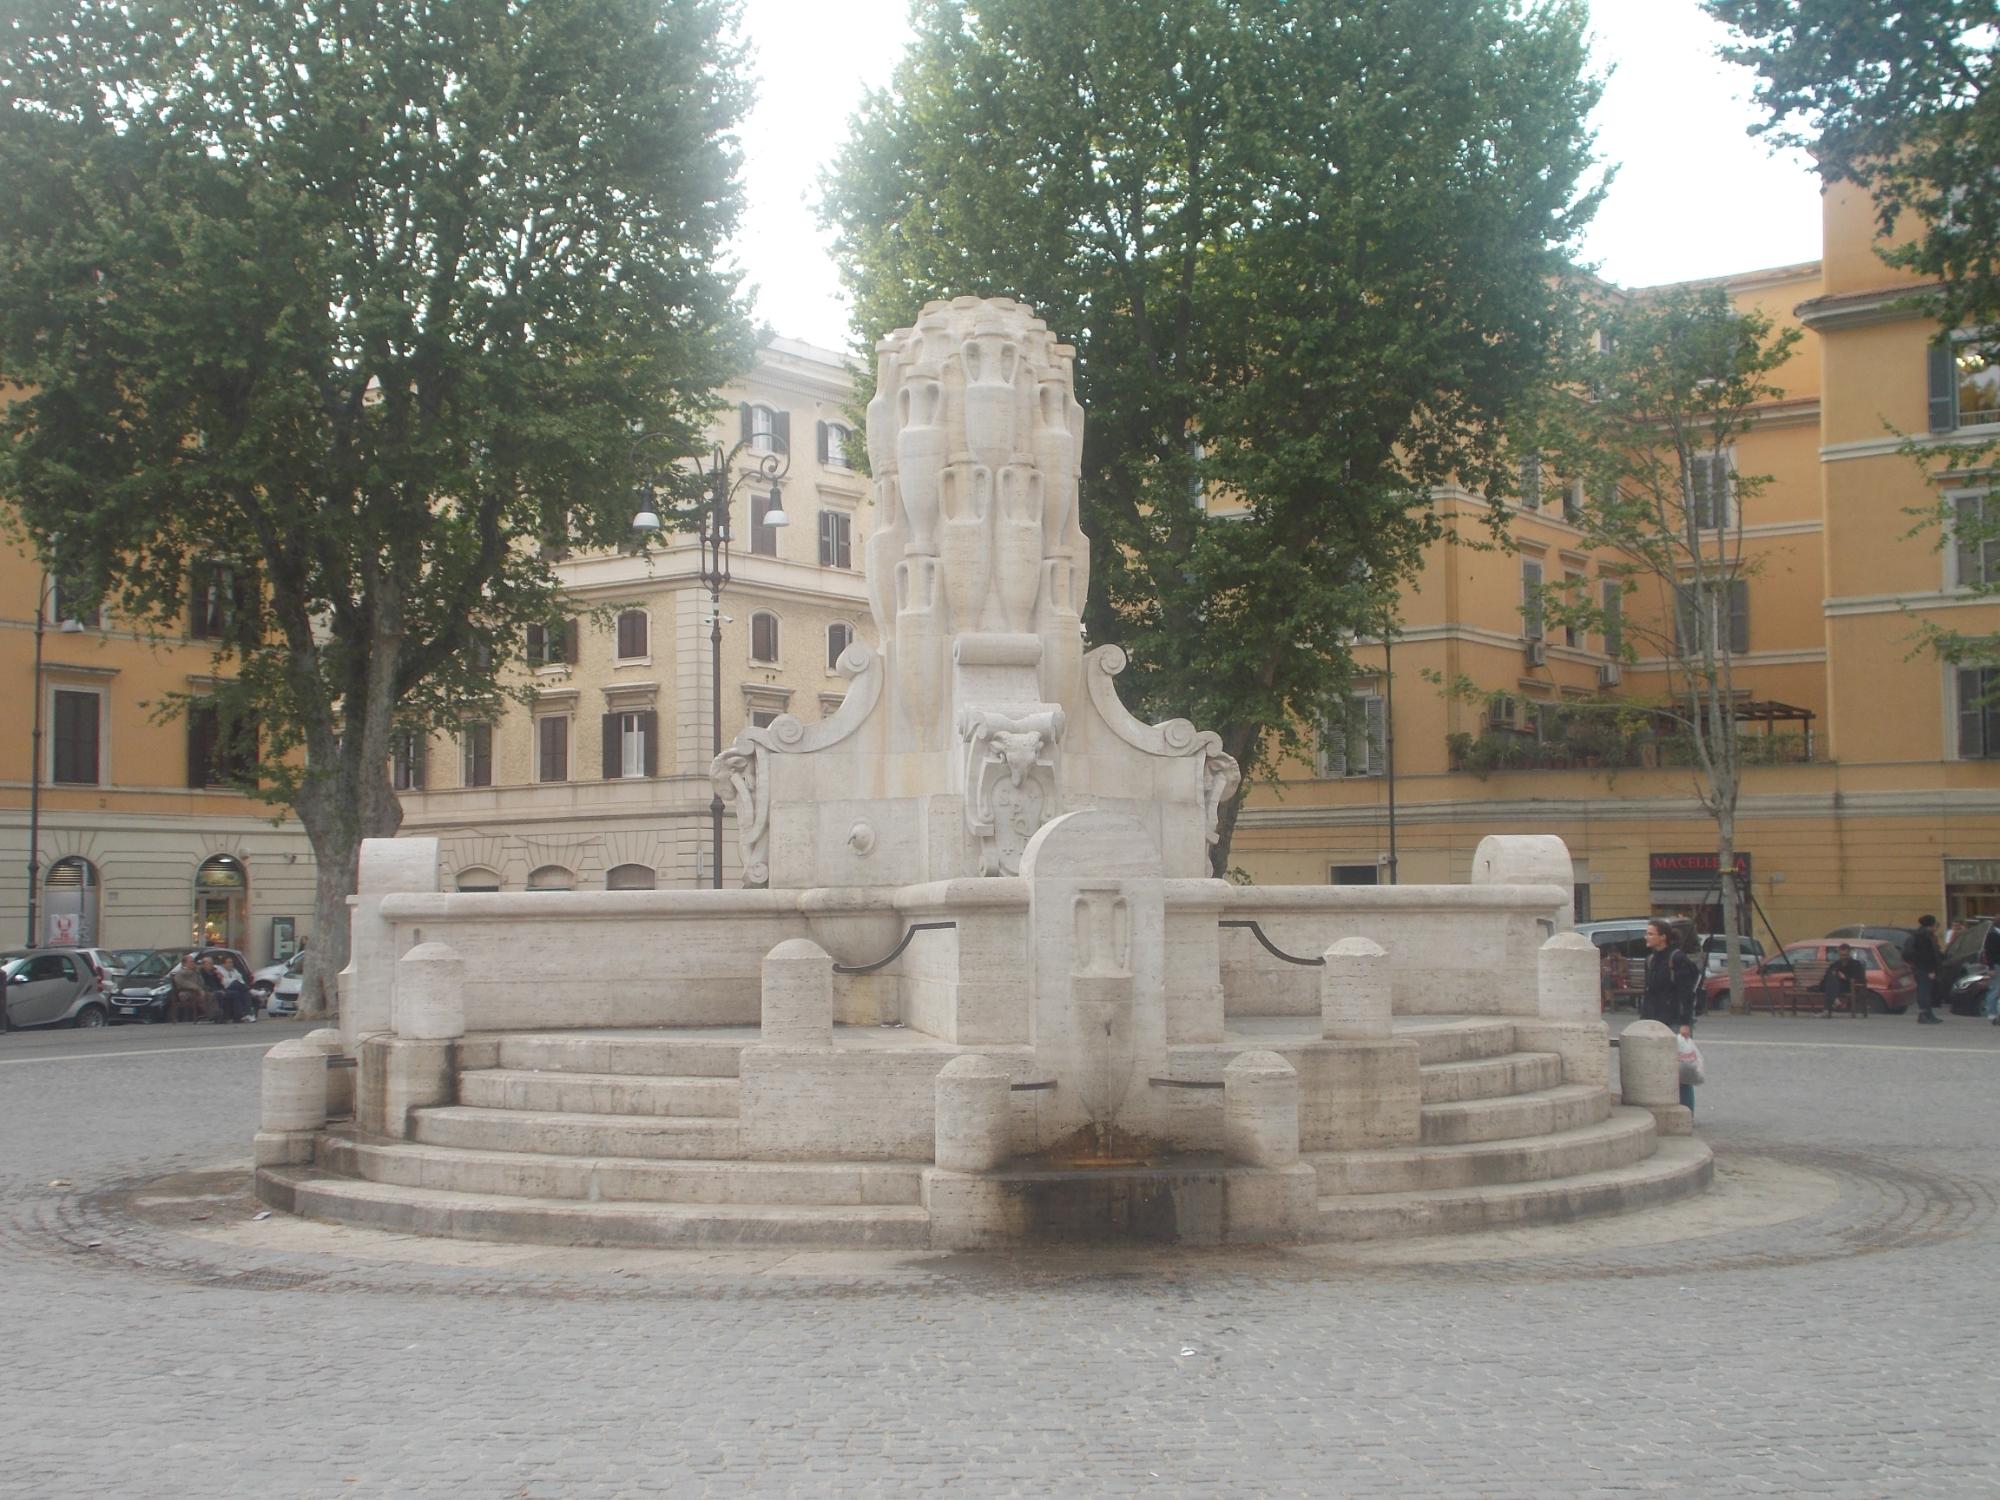 Fontana delle Anfore